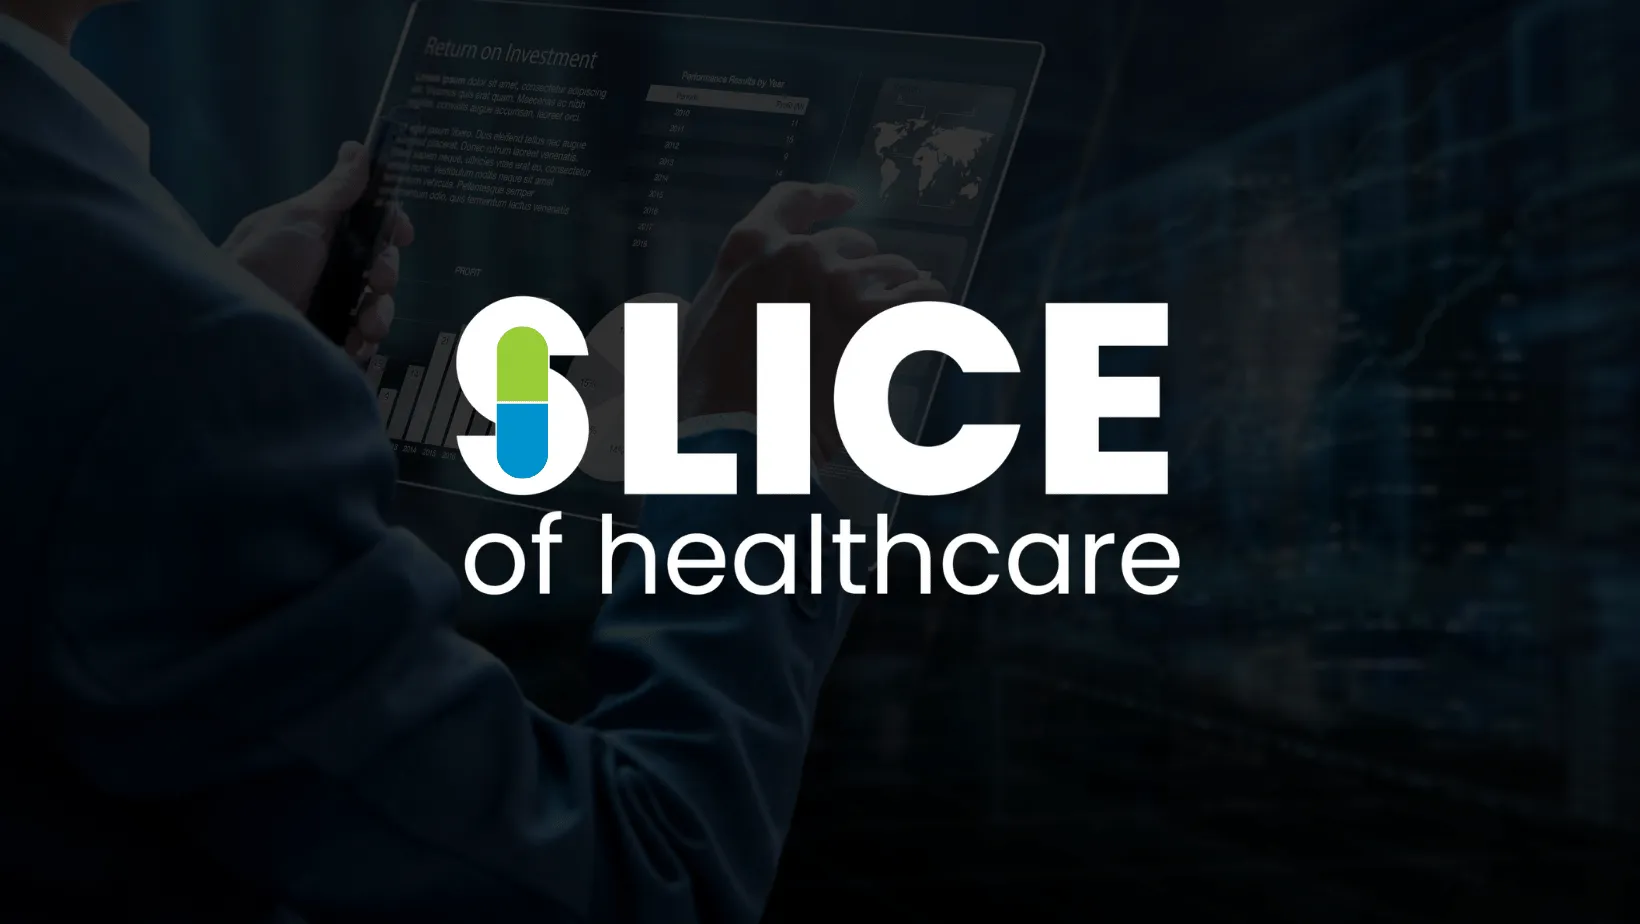 White Slice of Healthcare podcast logo over a dark background.